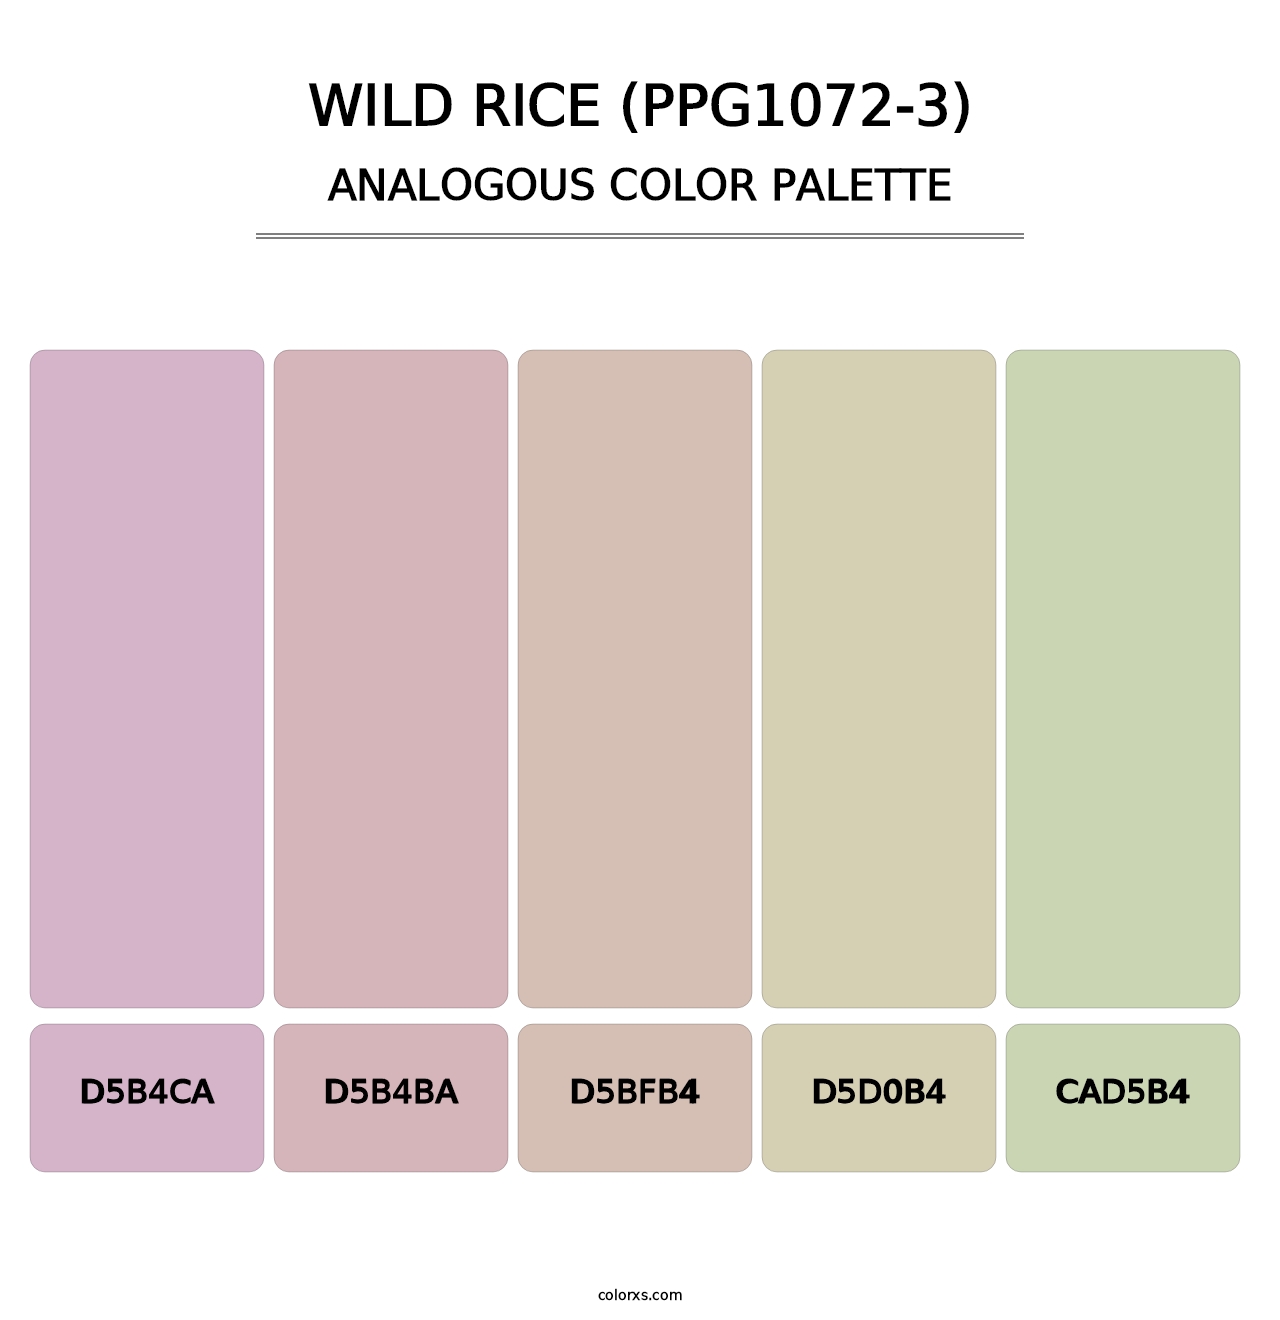 Wild Rice (PPG1072-3) - Analogous Color Palette